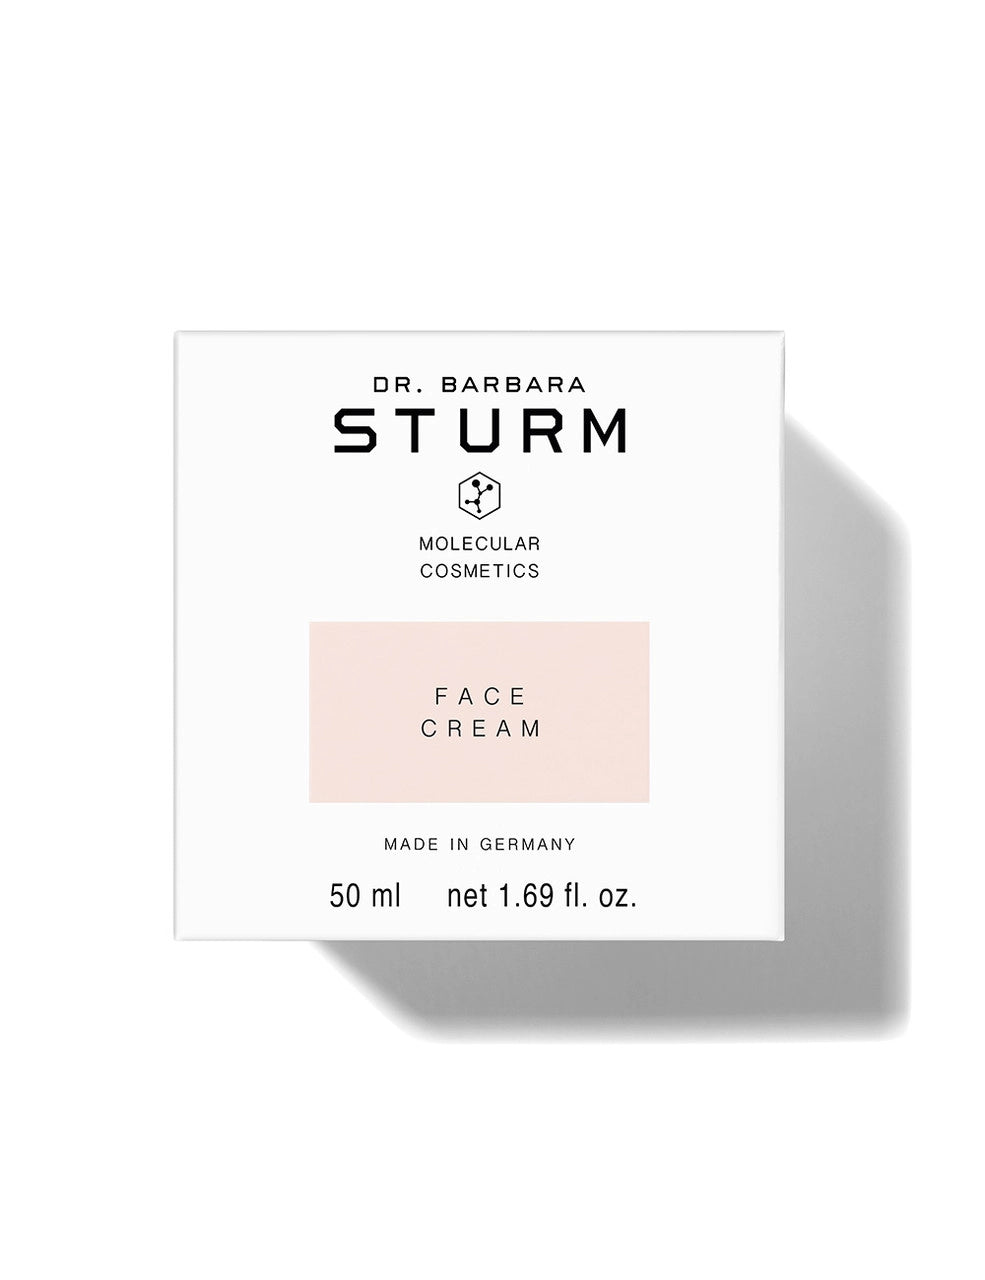 Dr. Barbara Sturm’s Anti-Aging Face Cream box